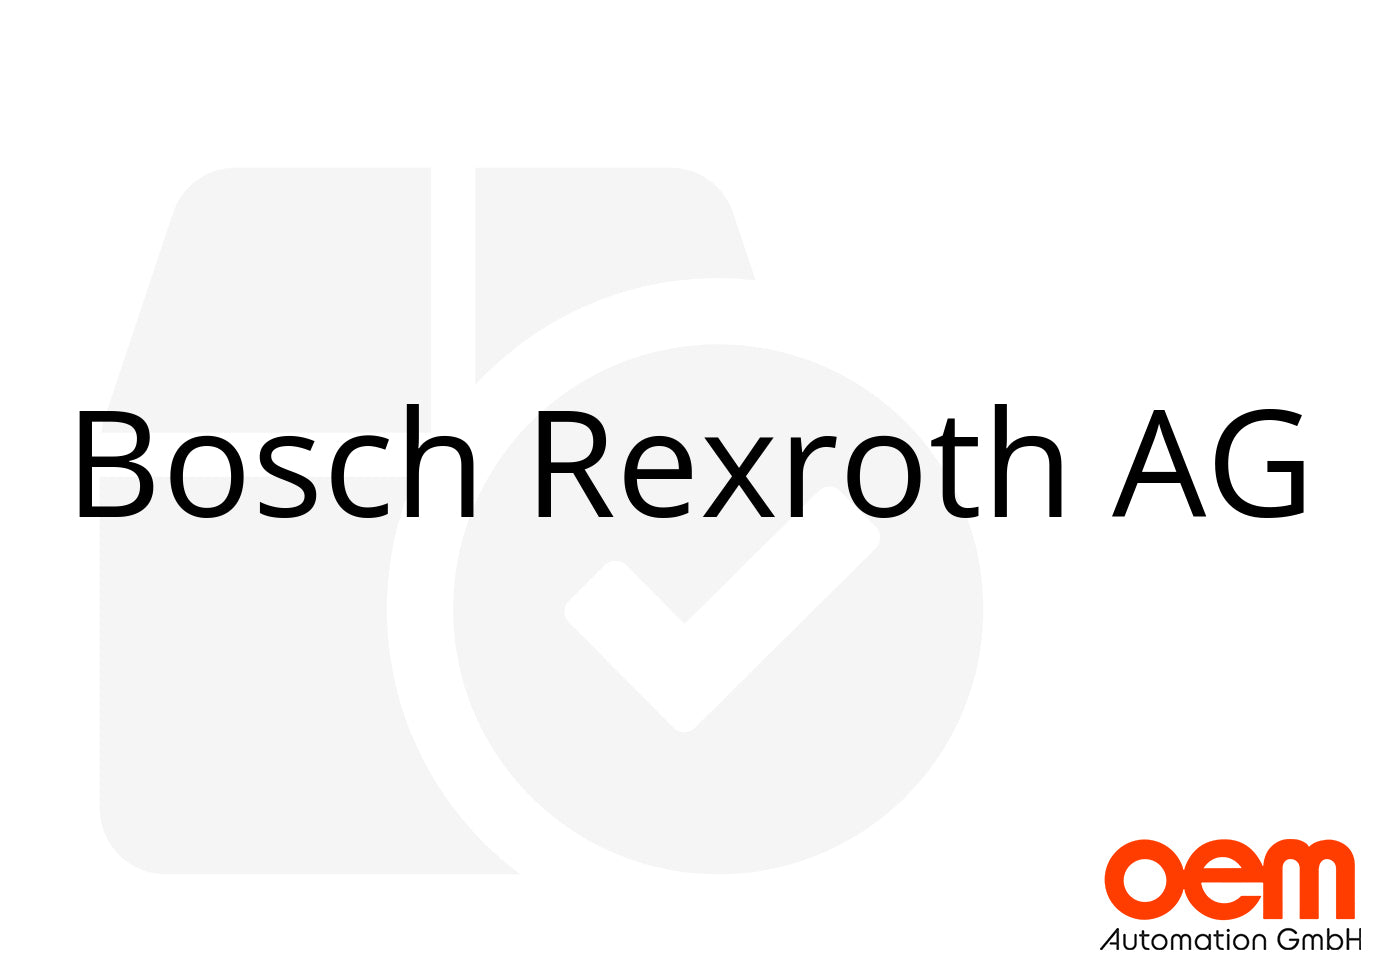 Bosch Rexroth AG R1605-802-31/0115